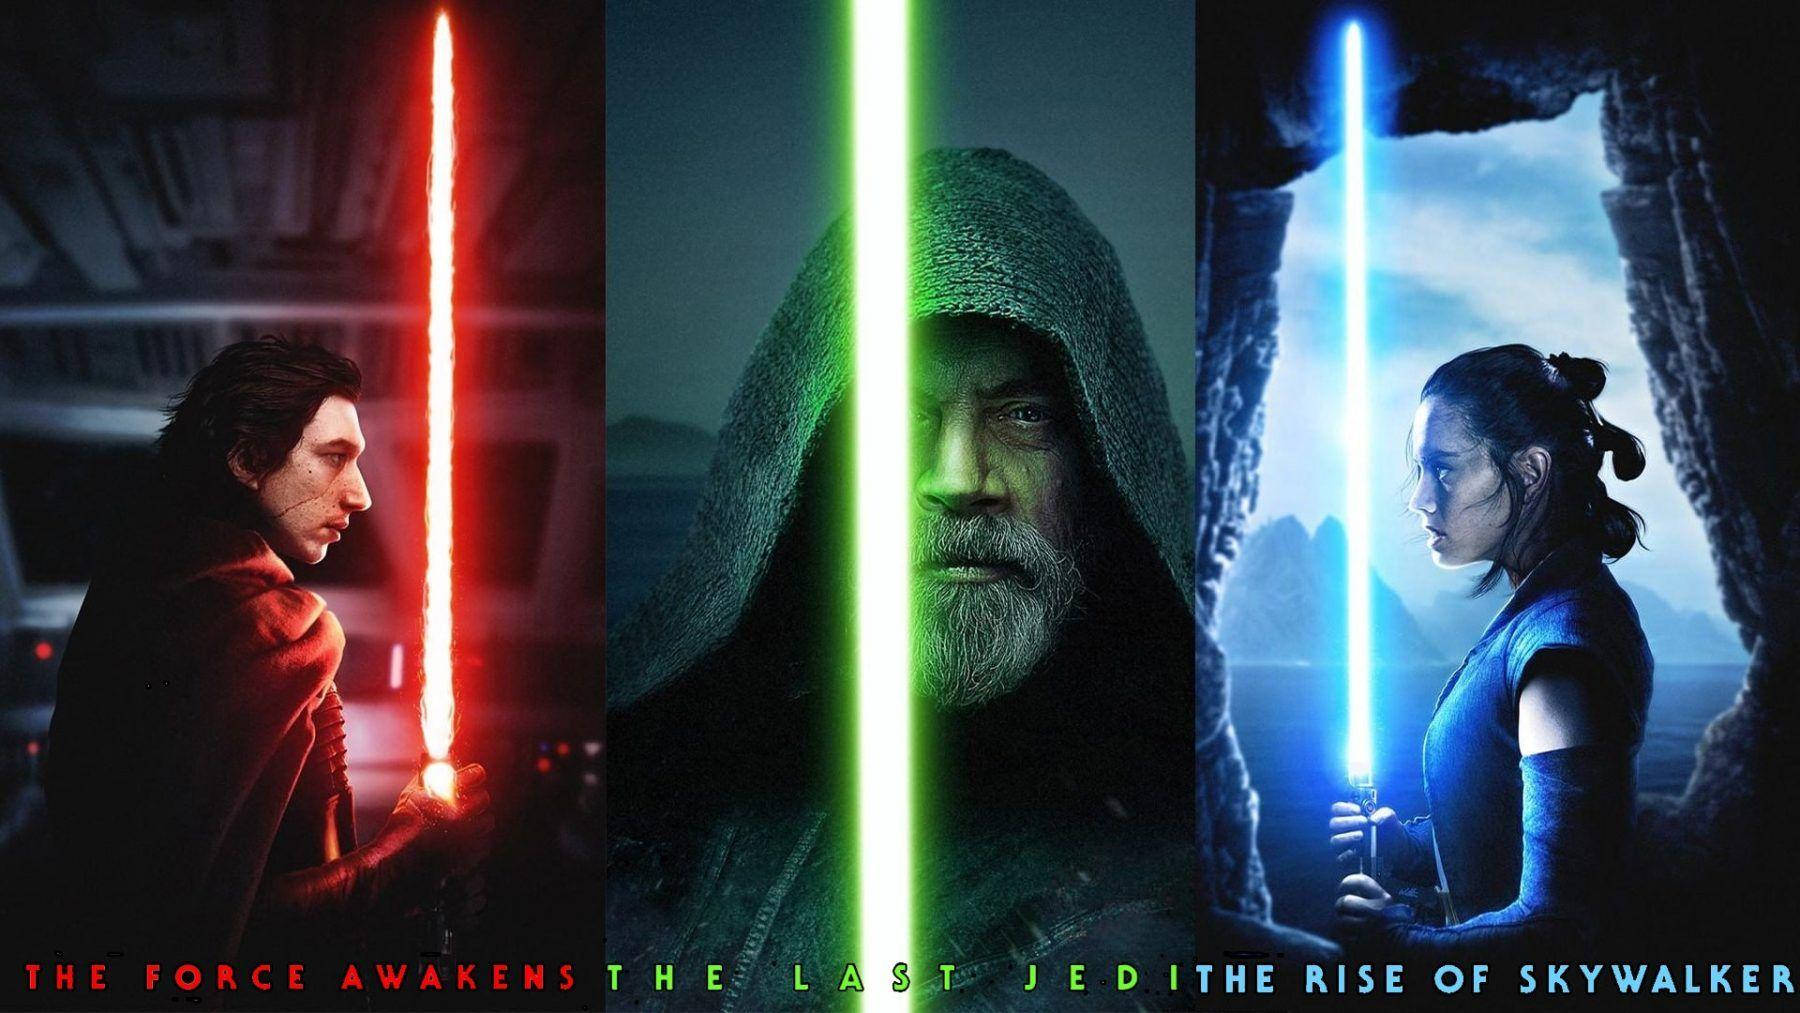 Luke Skywalker, ready to take on the Empire. Wallpaper